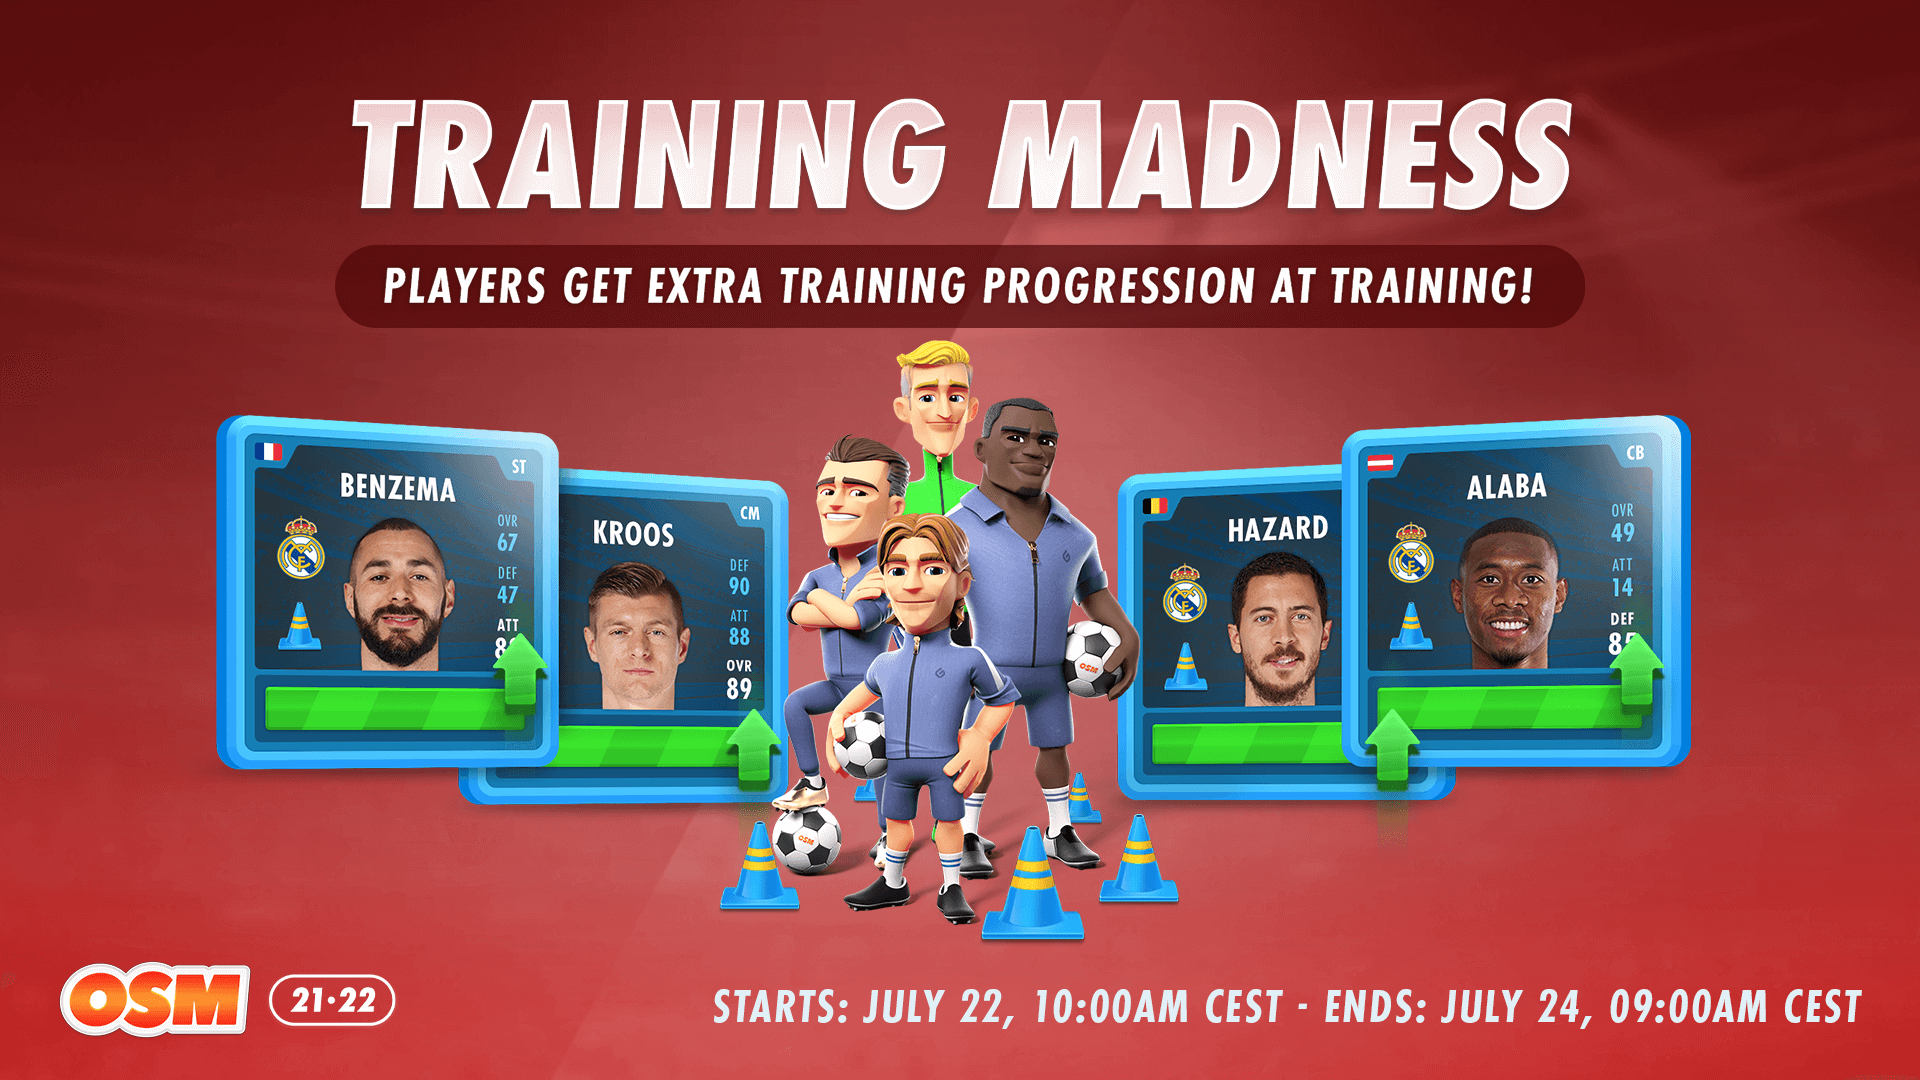 Forum_Training Madness_REDDIT.png